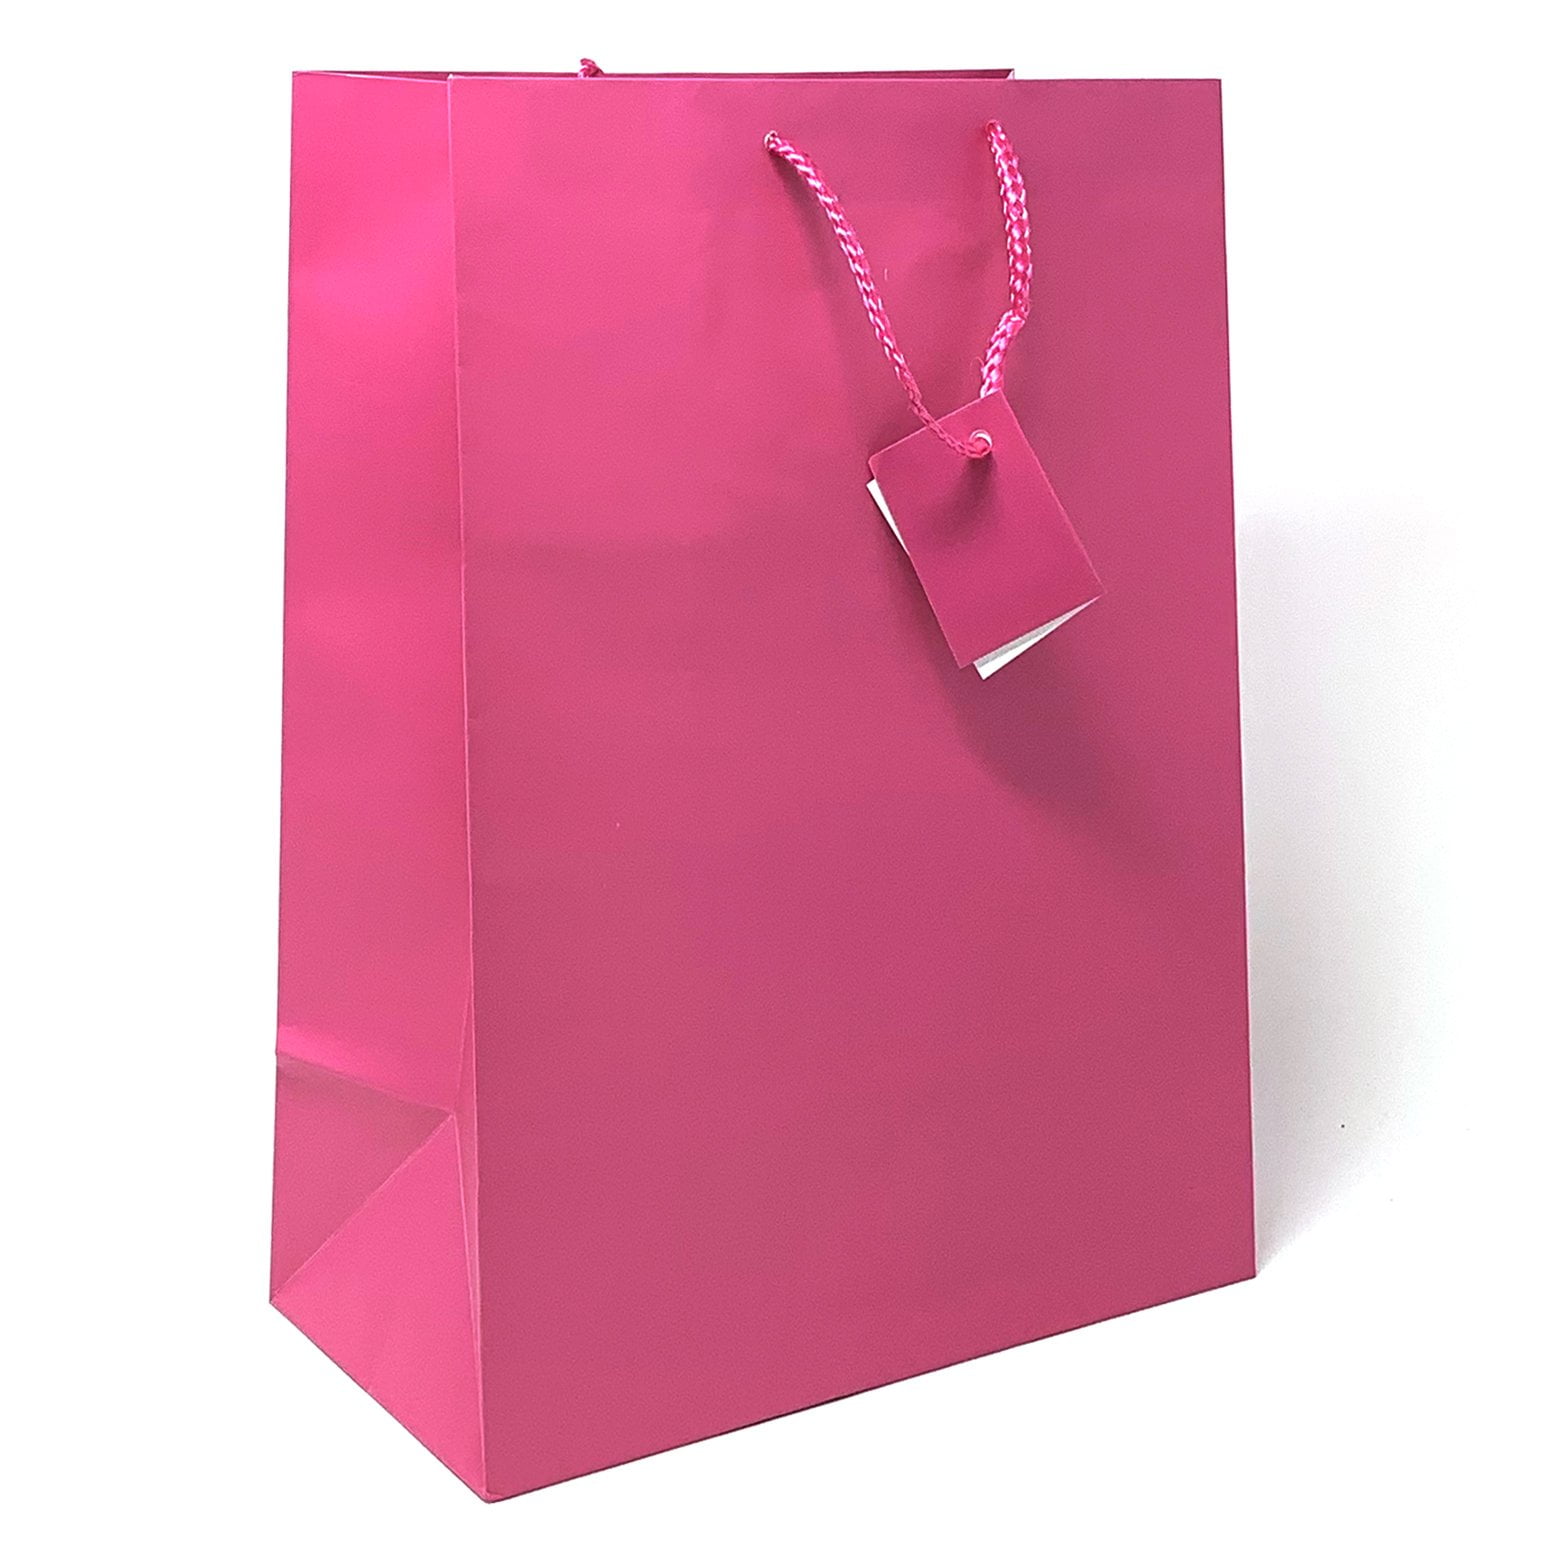 Allgala 12PK Value Premium Solid Color Paper Gift Bags (17